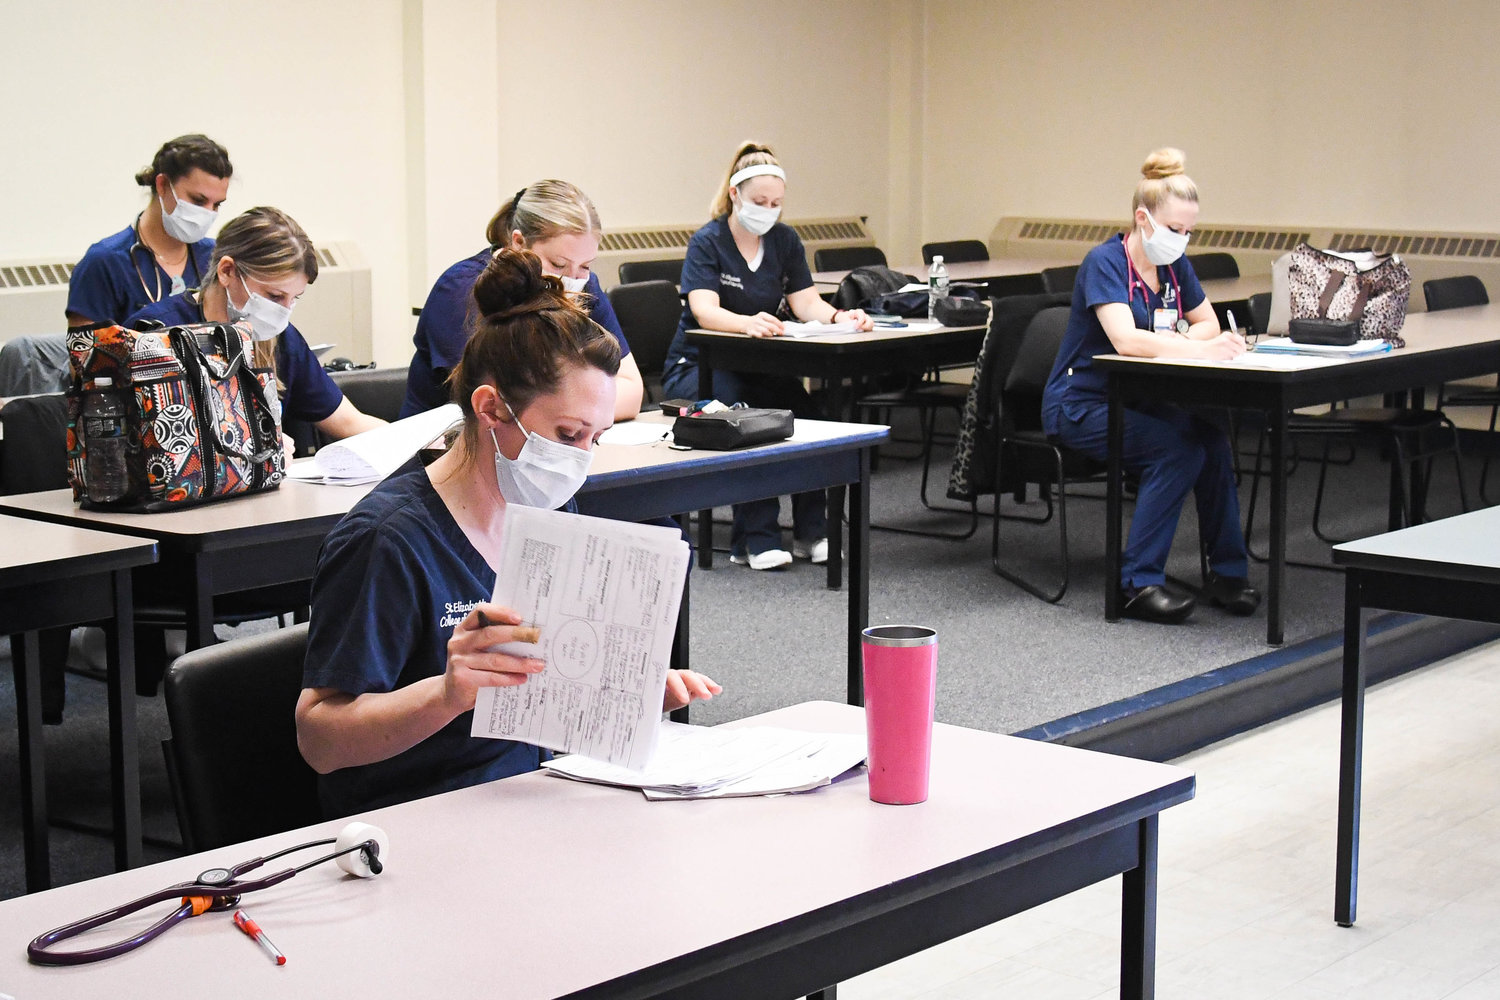 St. Elizabeth College of Nursing students attend class on April 22.